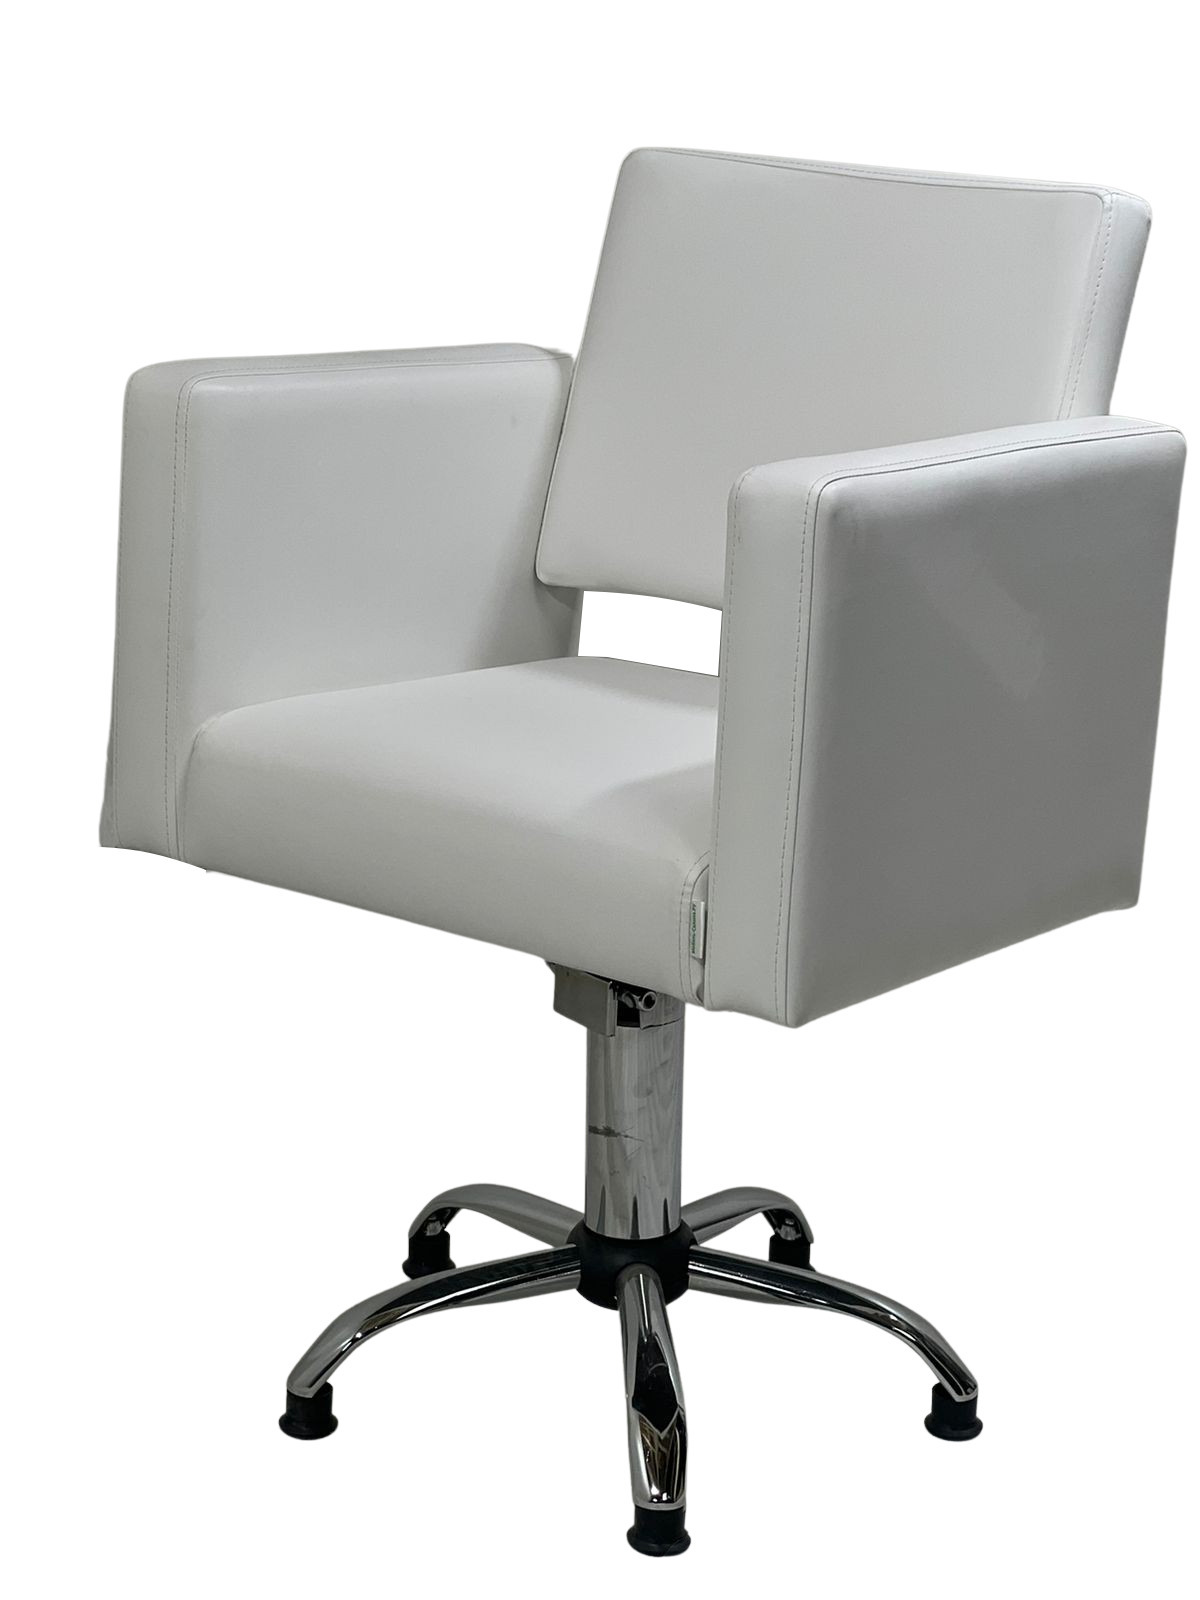 Парикмахерское кресло SunISpa Кубик, белый, гидравлика пятилучье